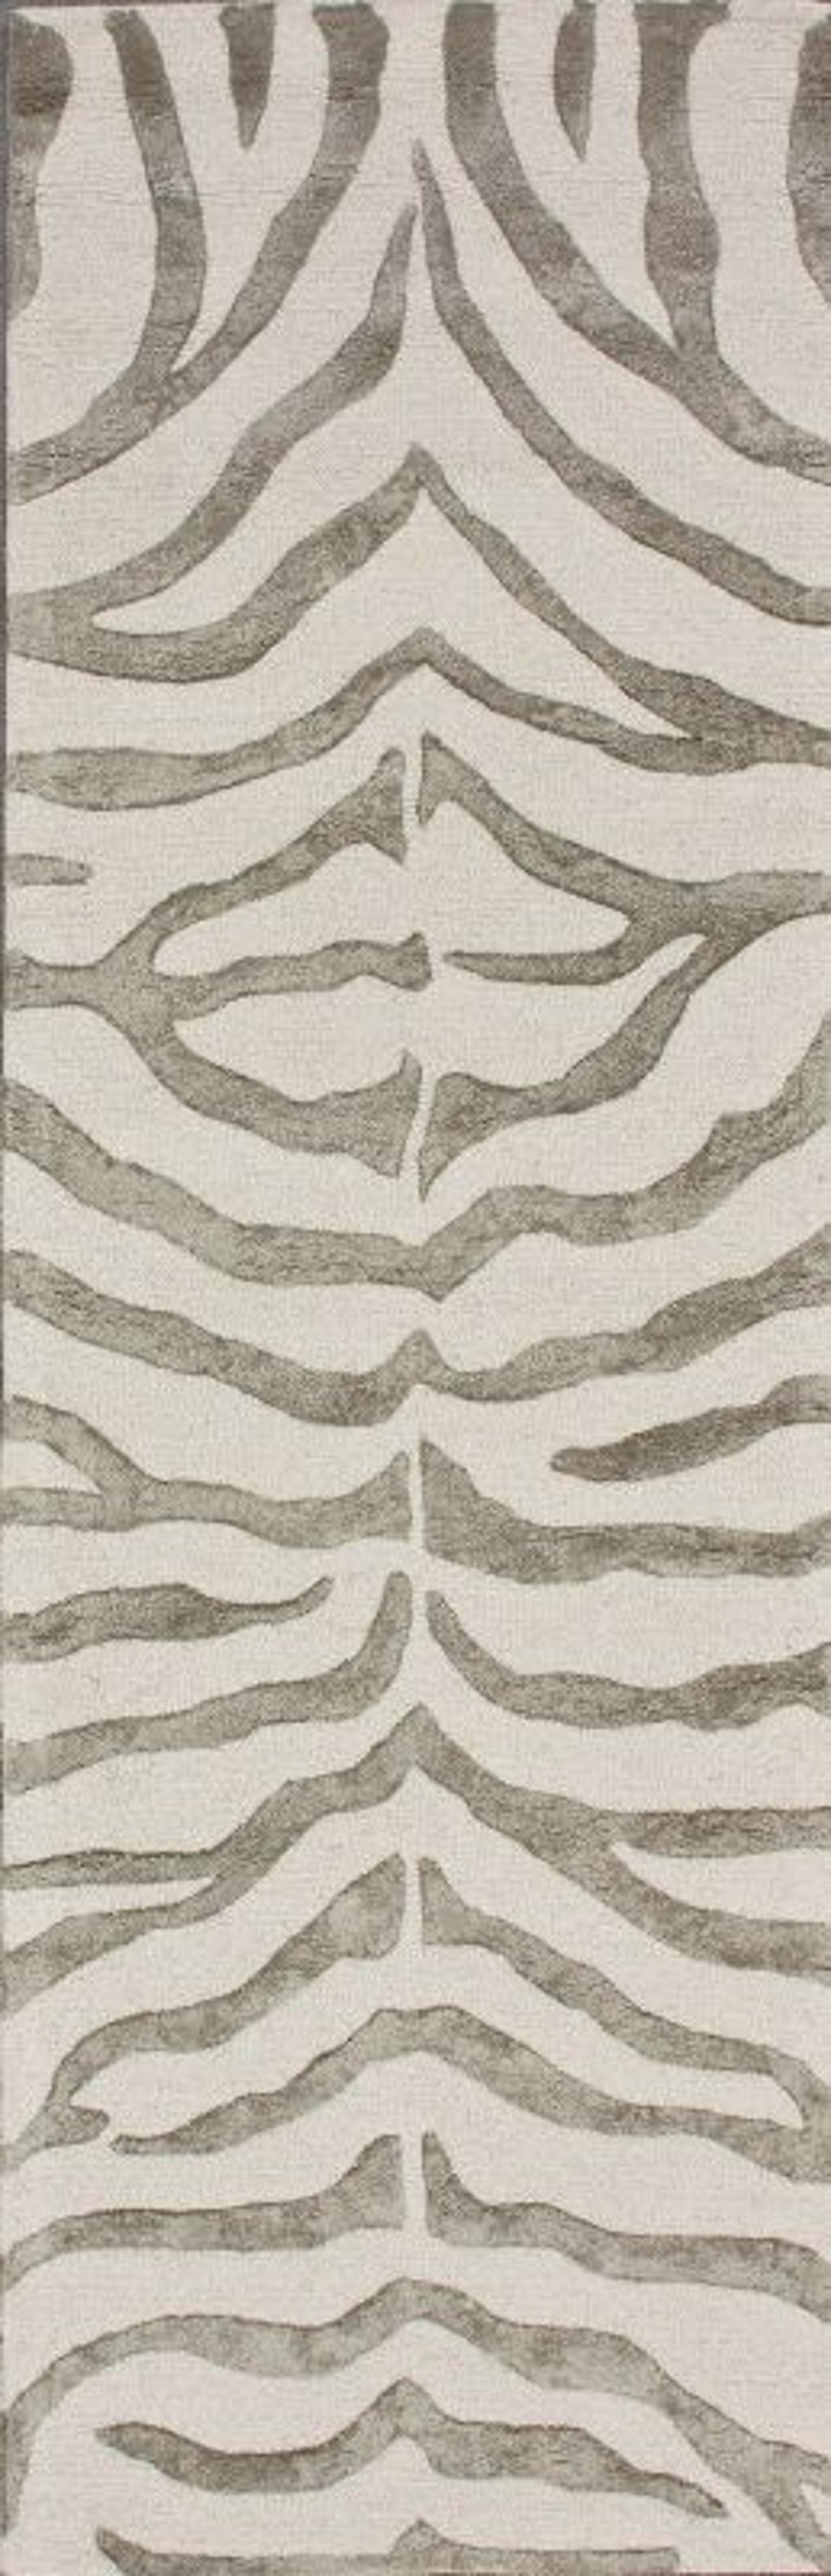 Hand Tufted Plush Zebra Area Rug - Image 4